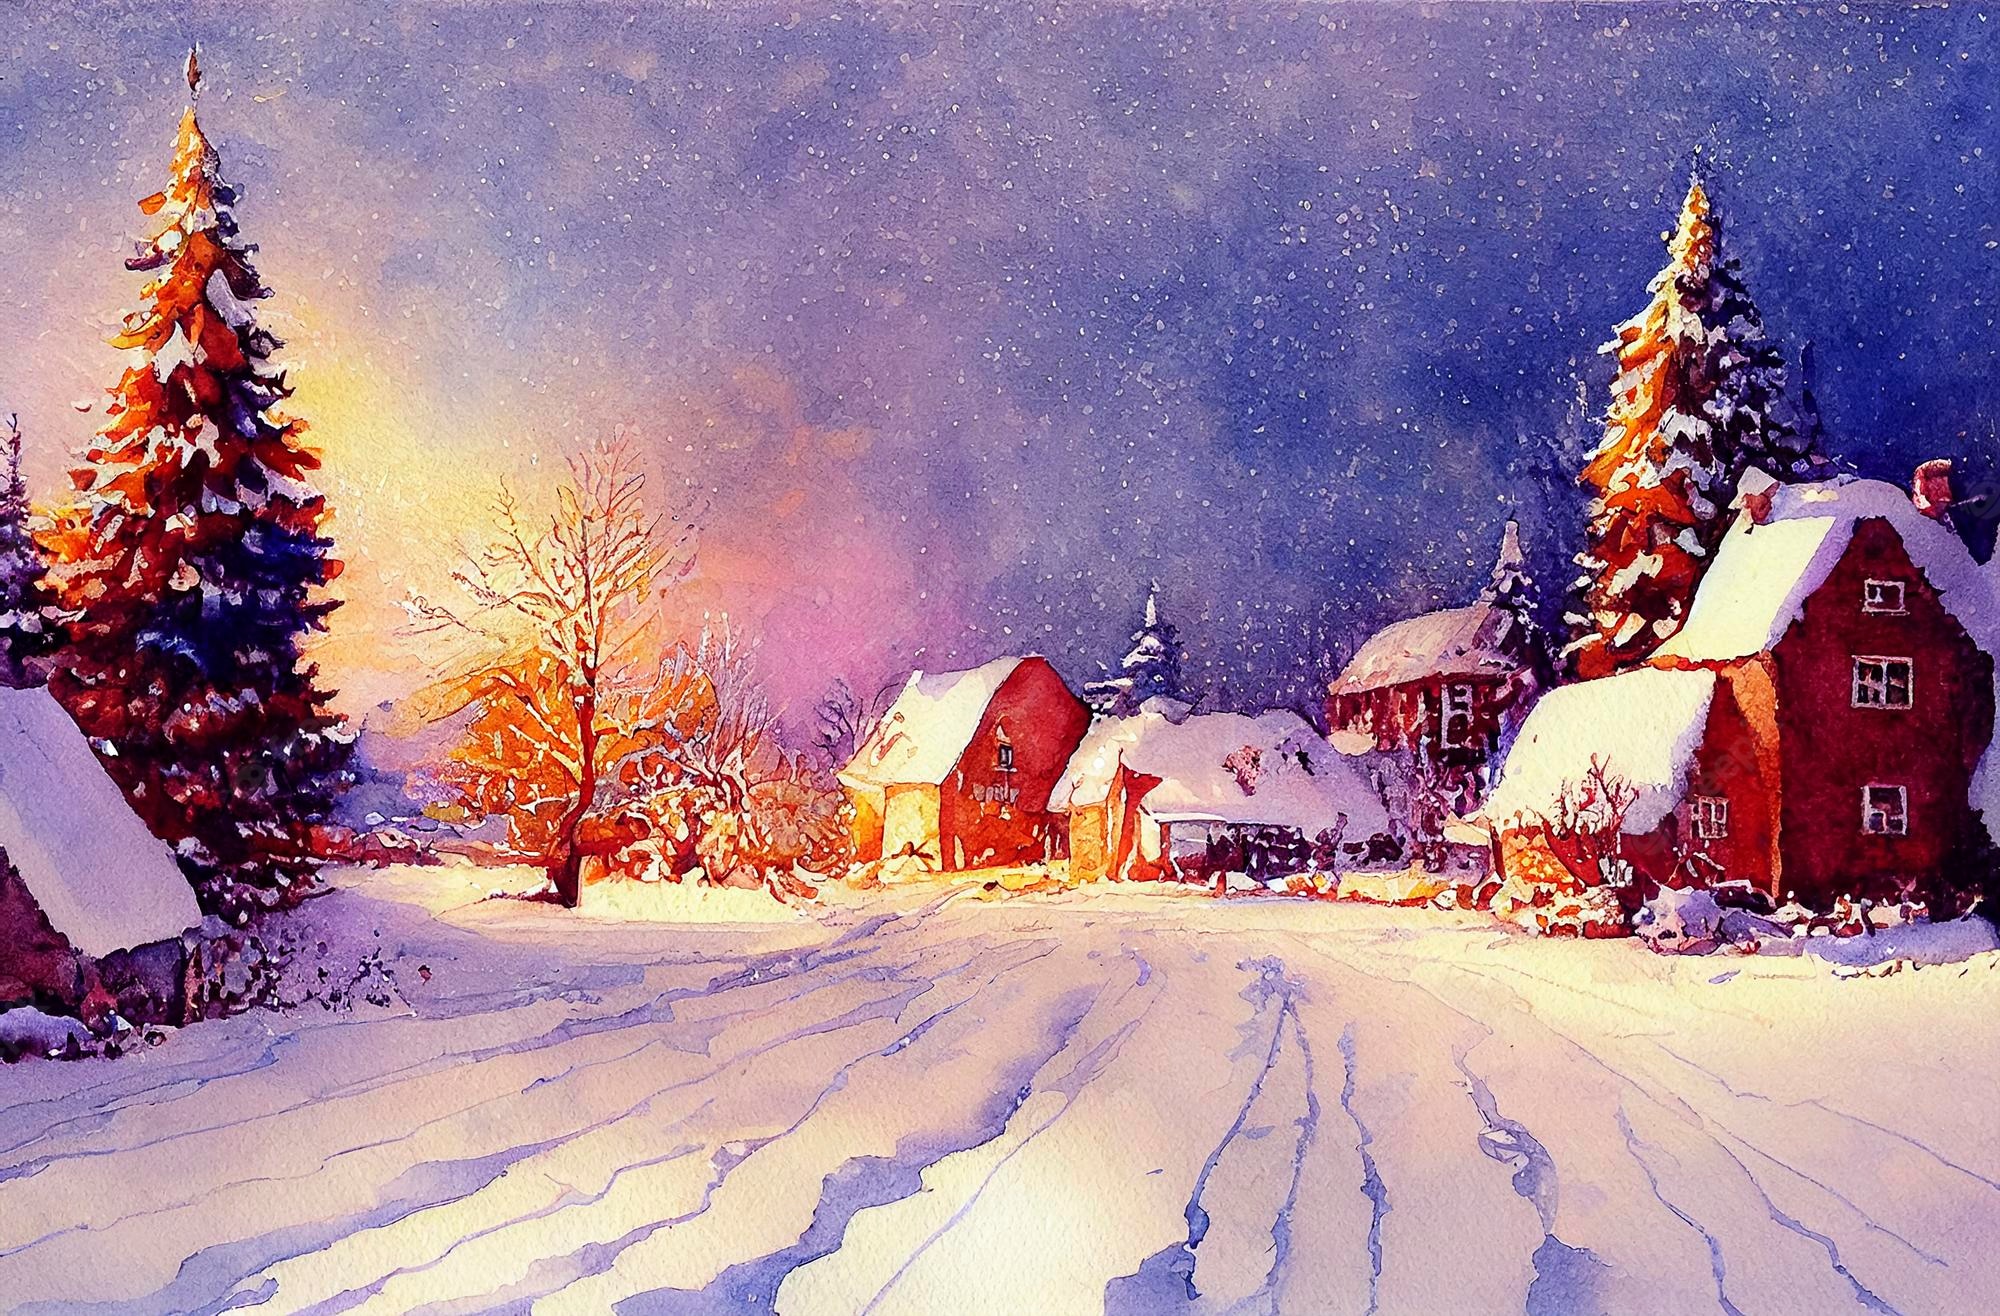 Christmas landscape wallpaper Image. Free Vectors, & PSD